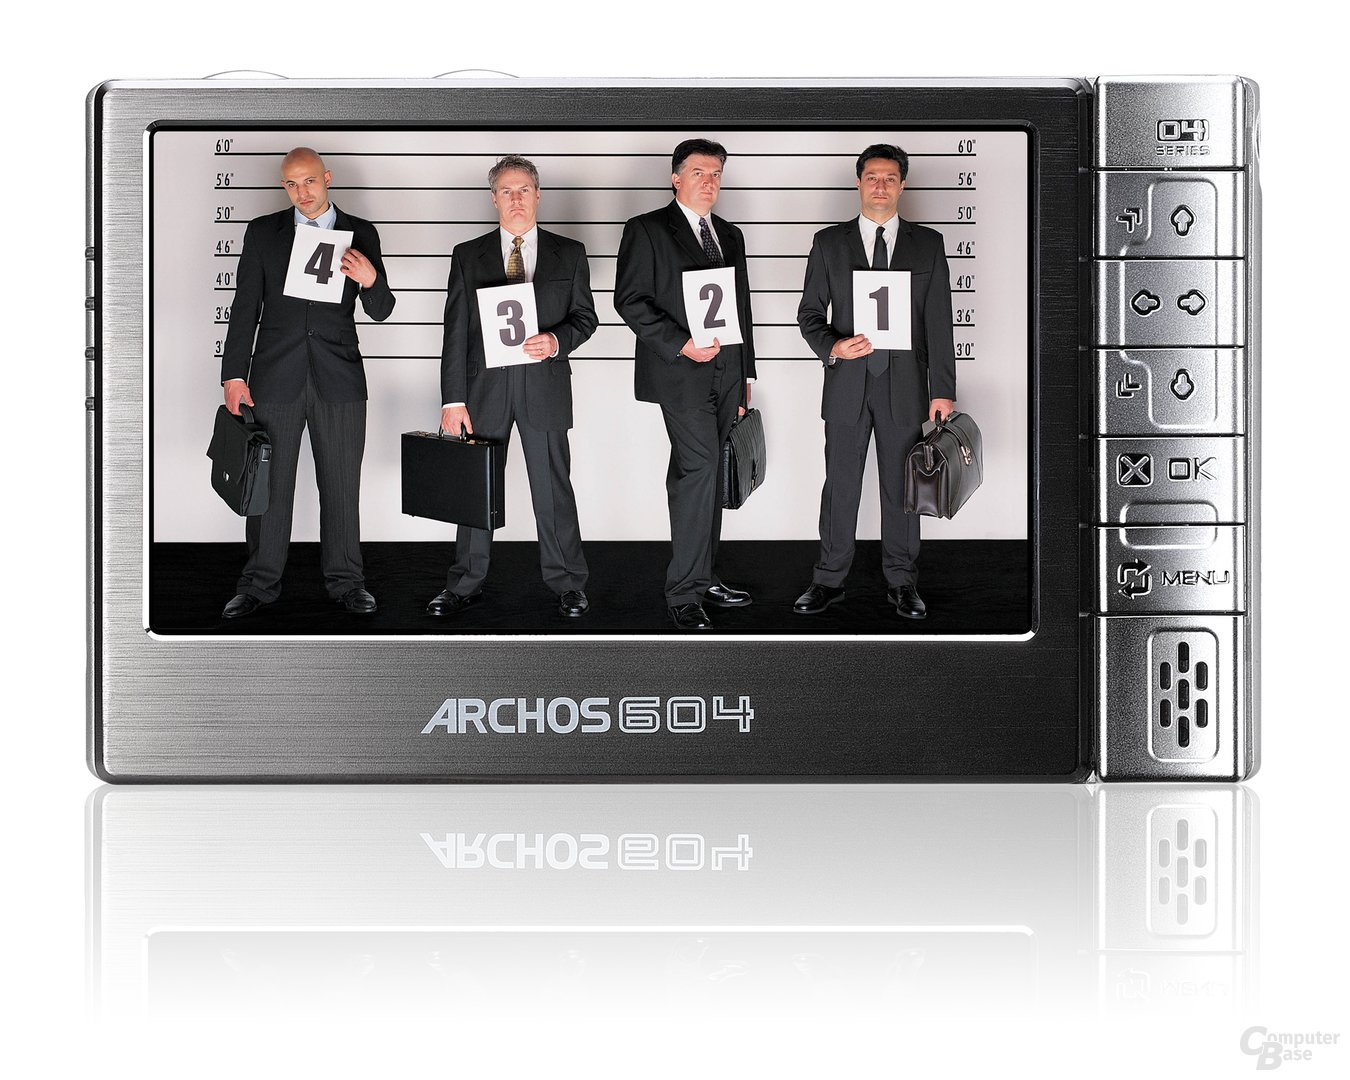 ARCHOS_604-front